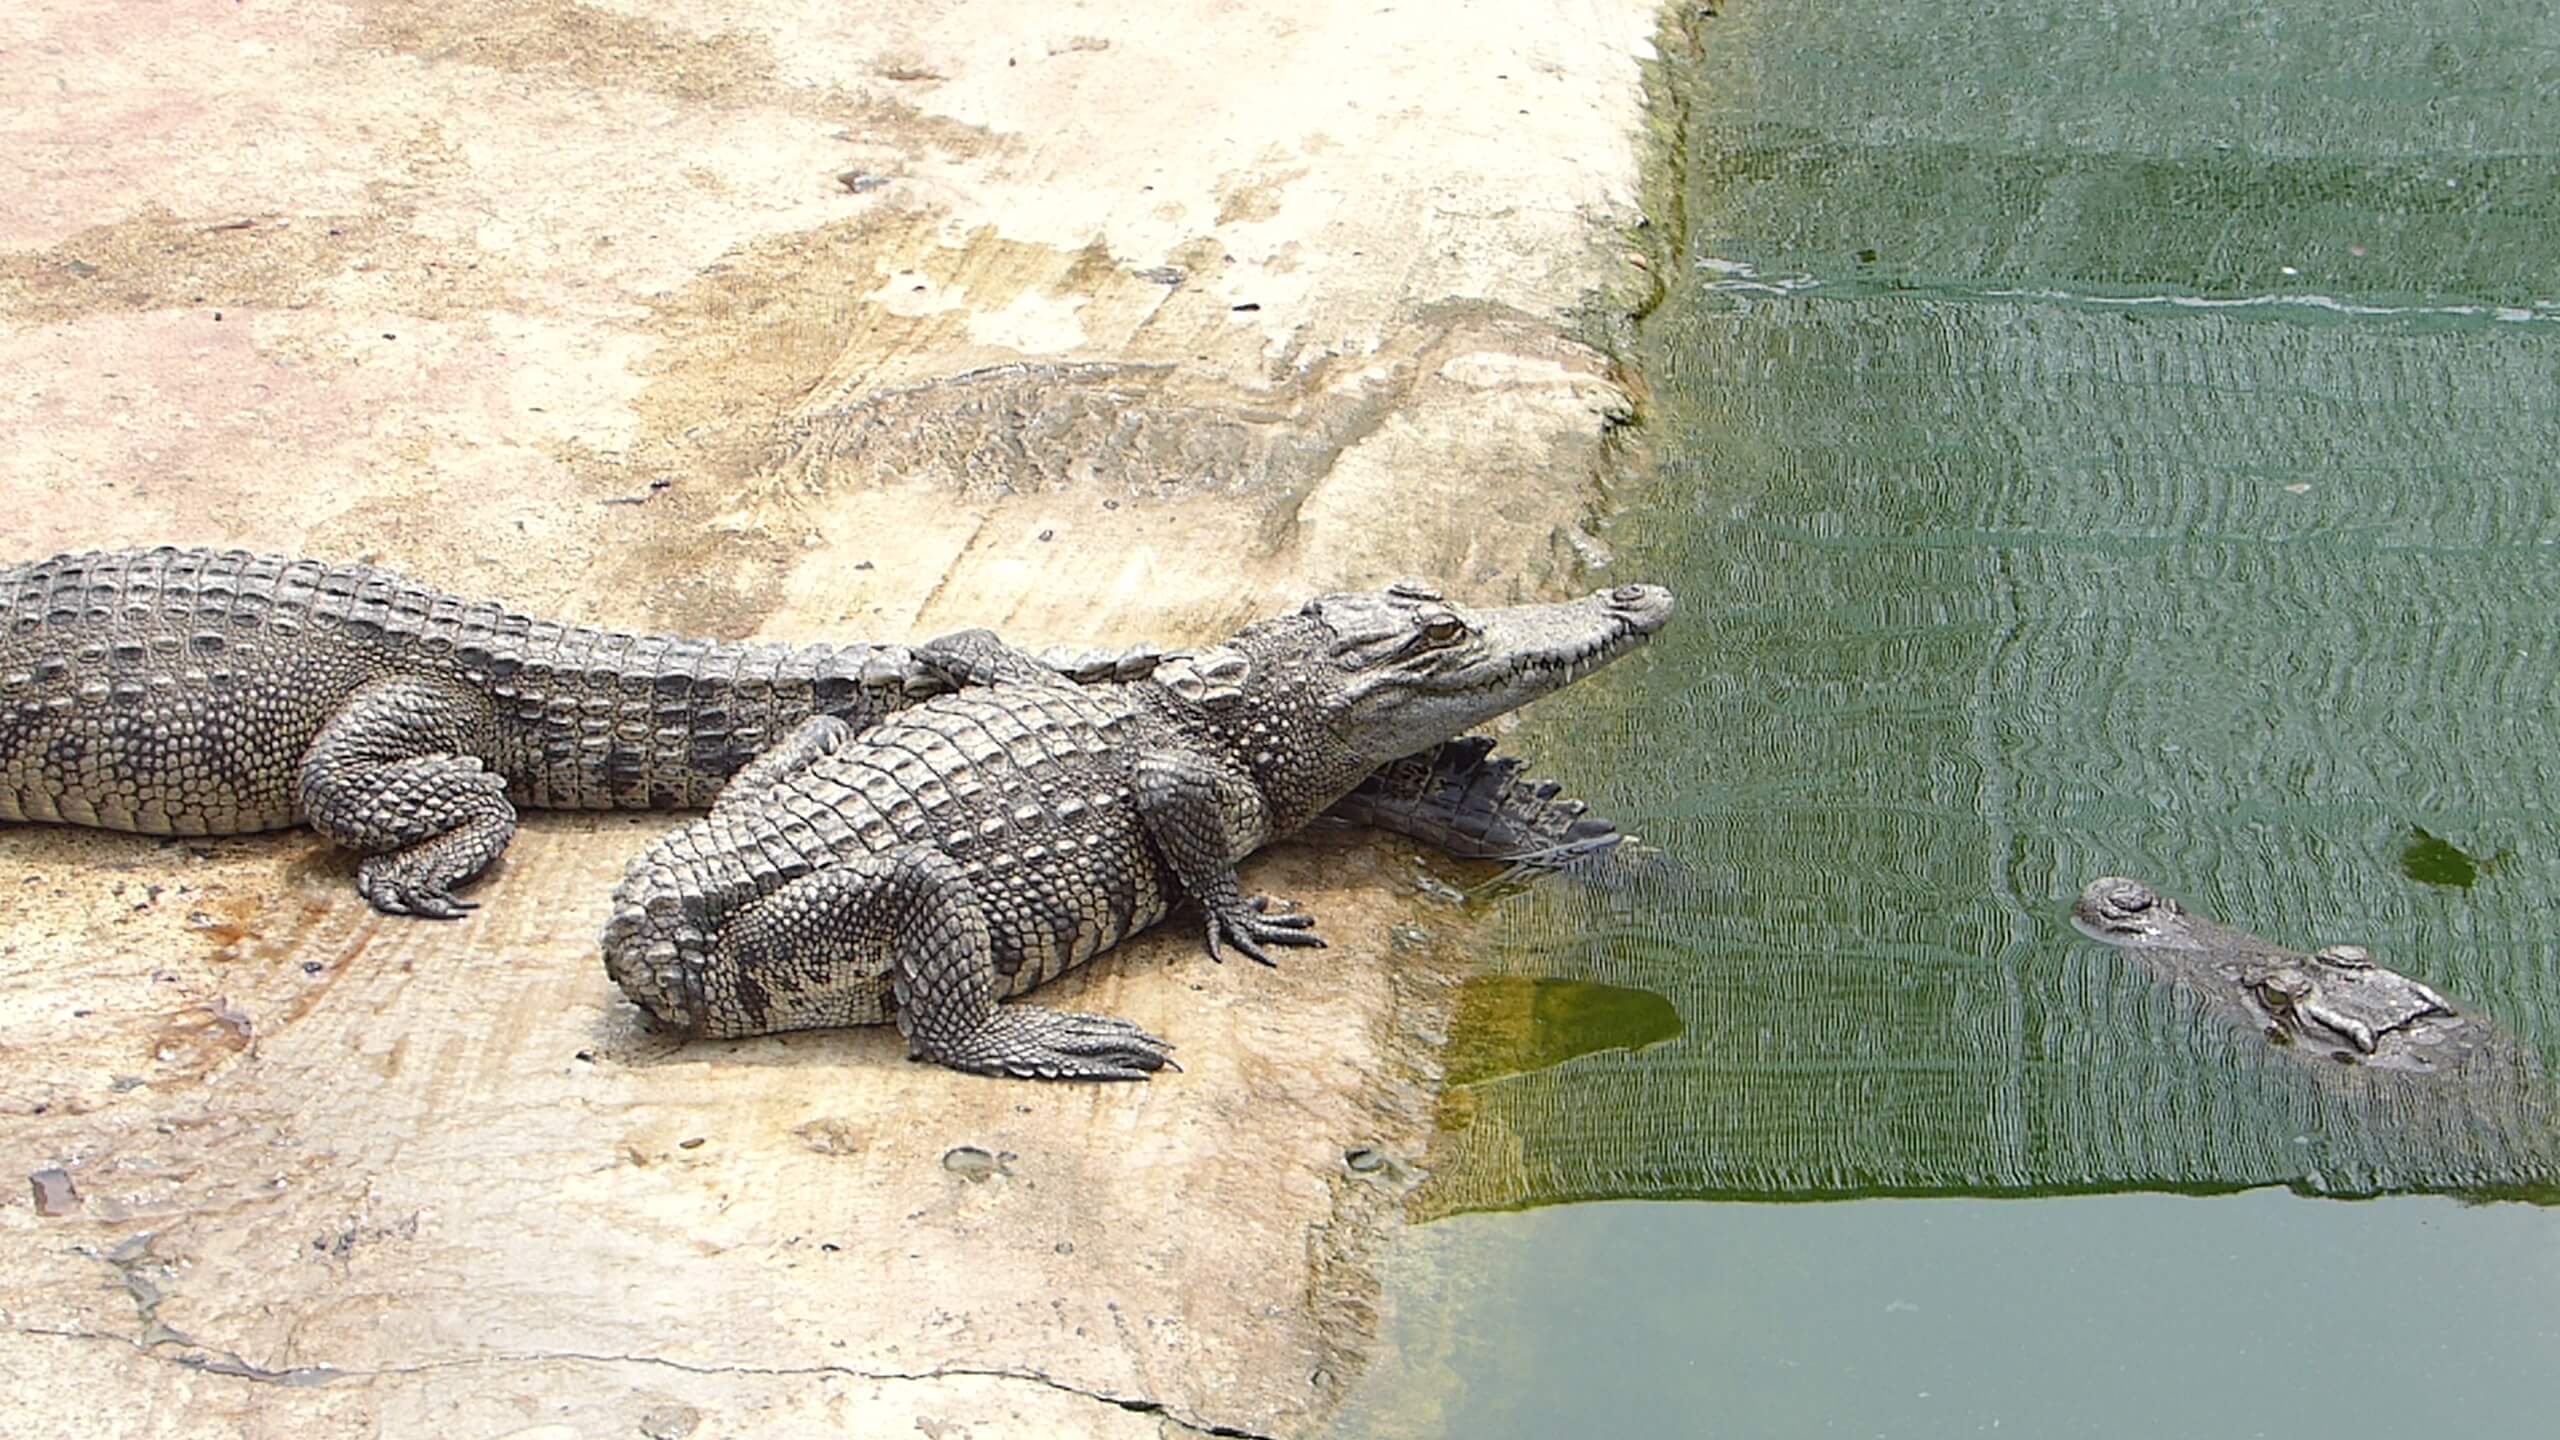 Is crocodile skin hard or soft? - Quora